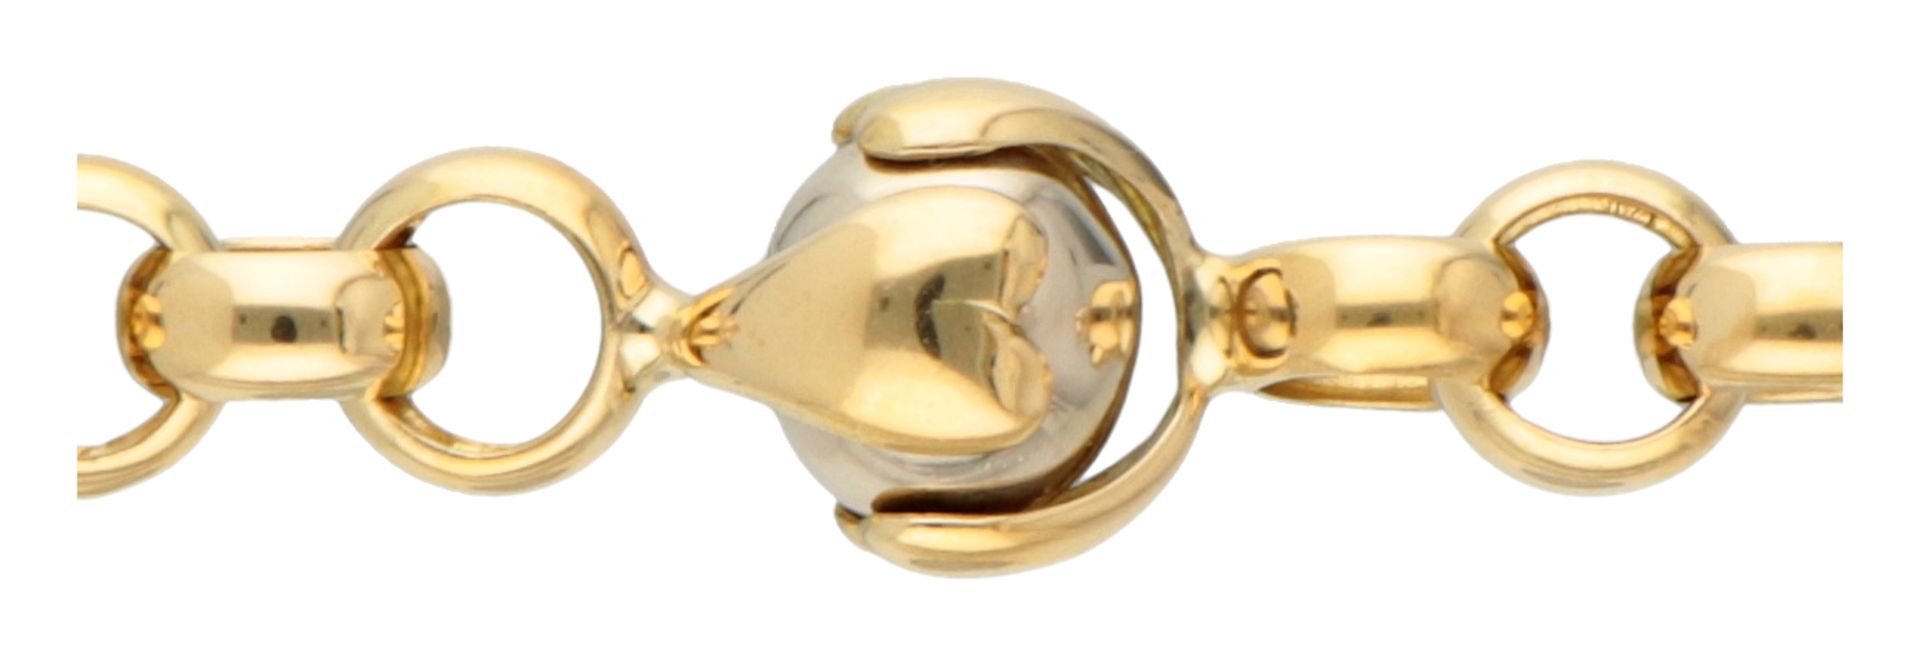 Italian 18K yellow gold anchor link bracelet. - Image 2 of 3